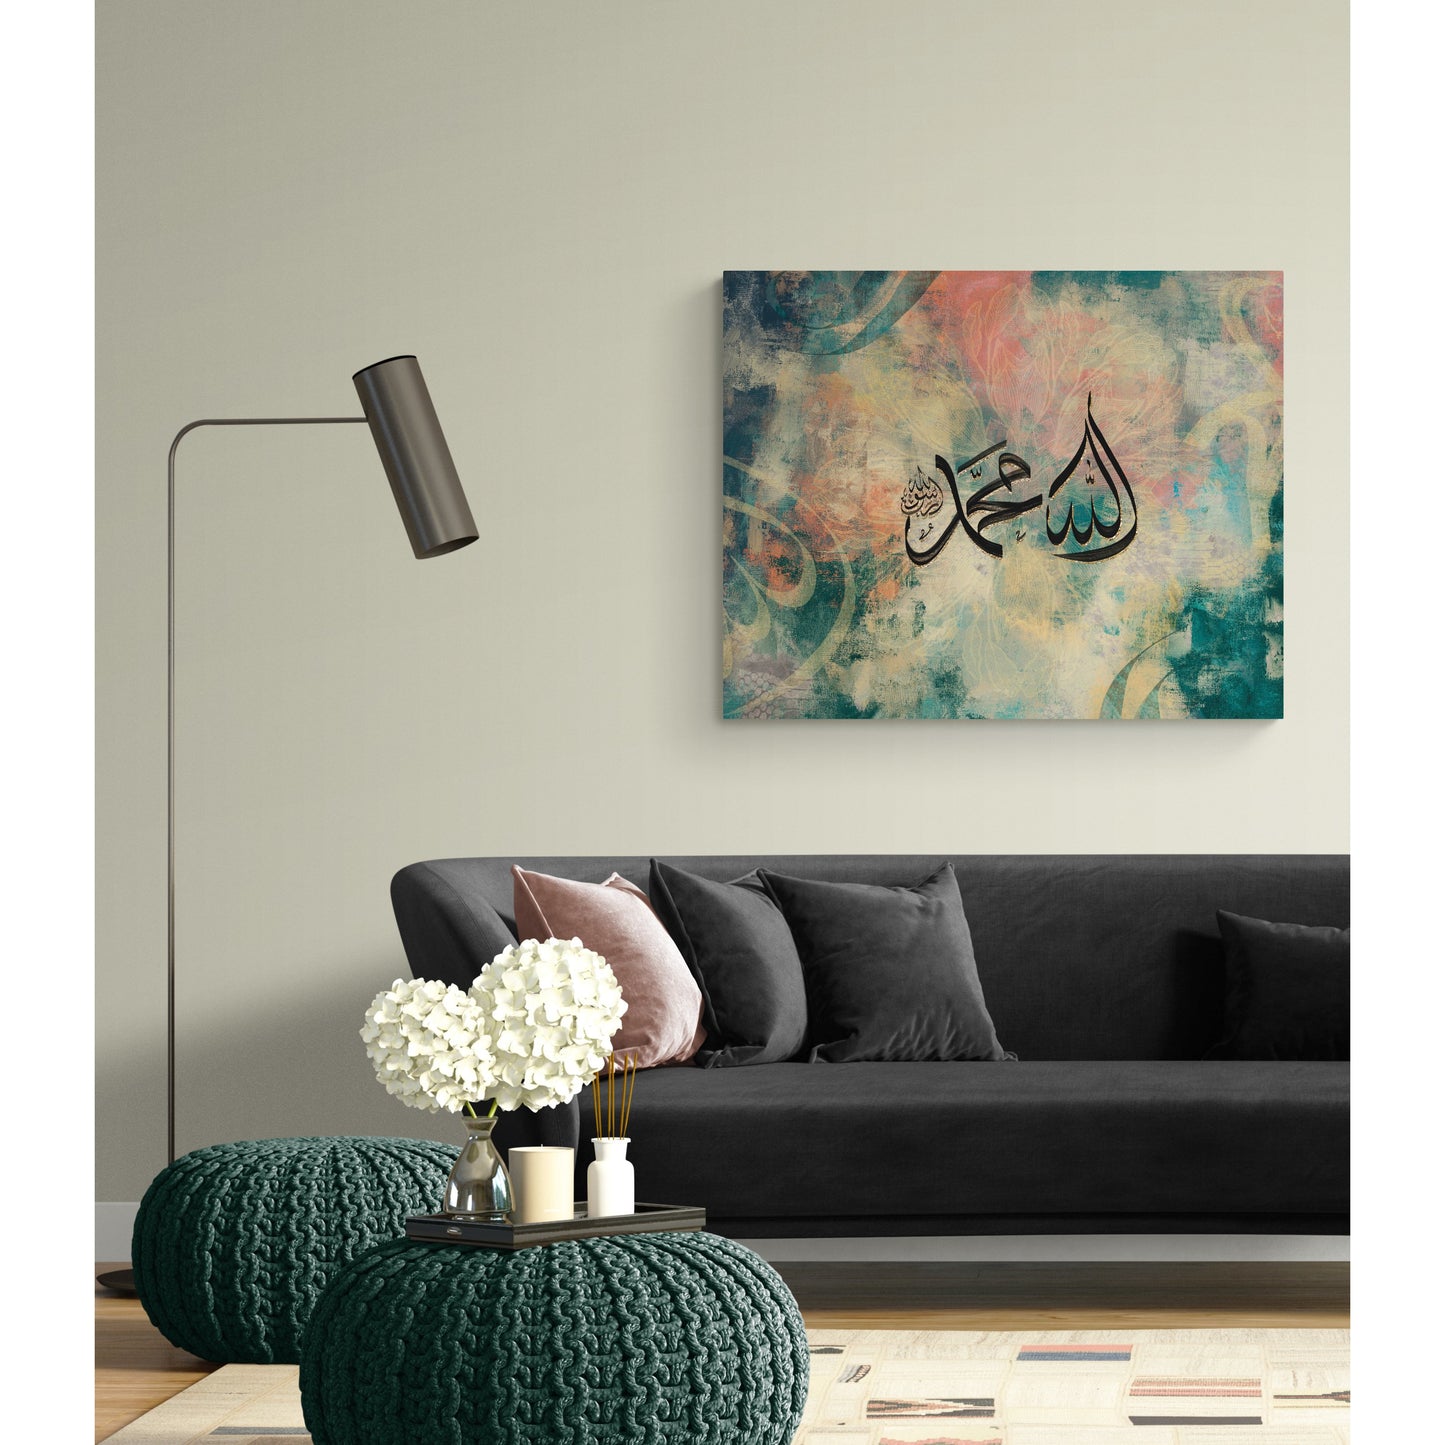 Allah (swt) & Muhammad (saw) Canvas: Autumn Vibrance